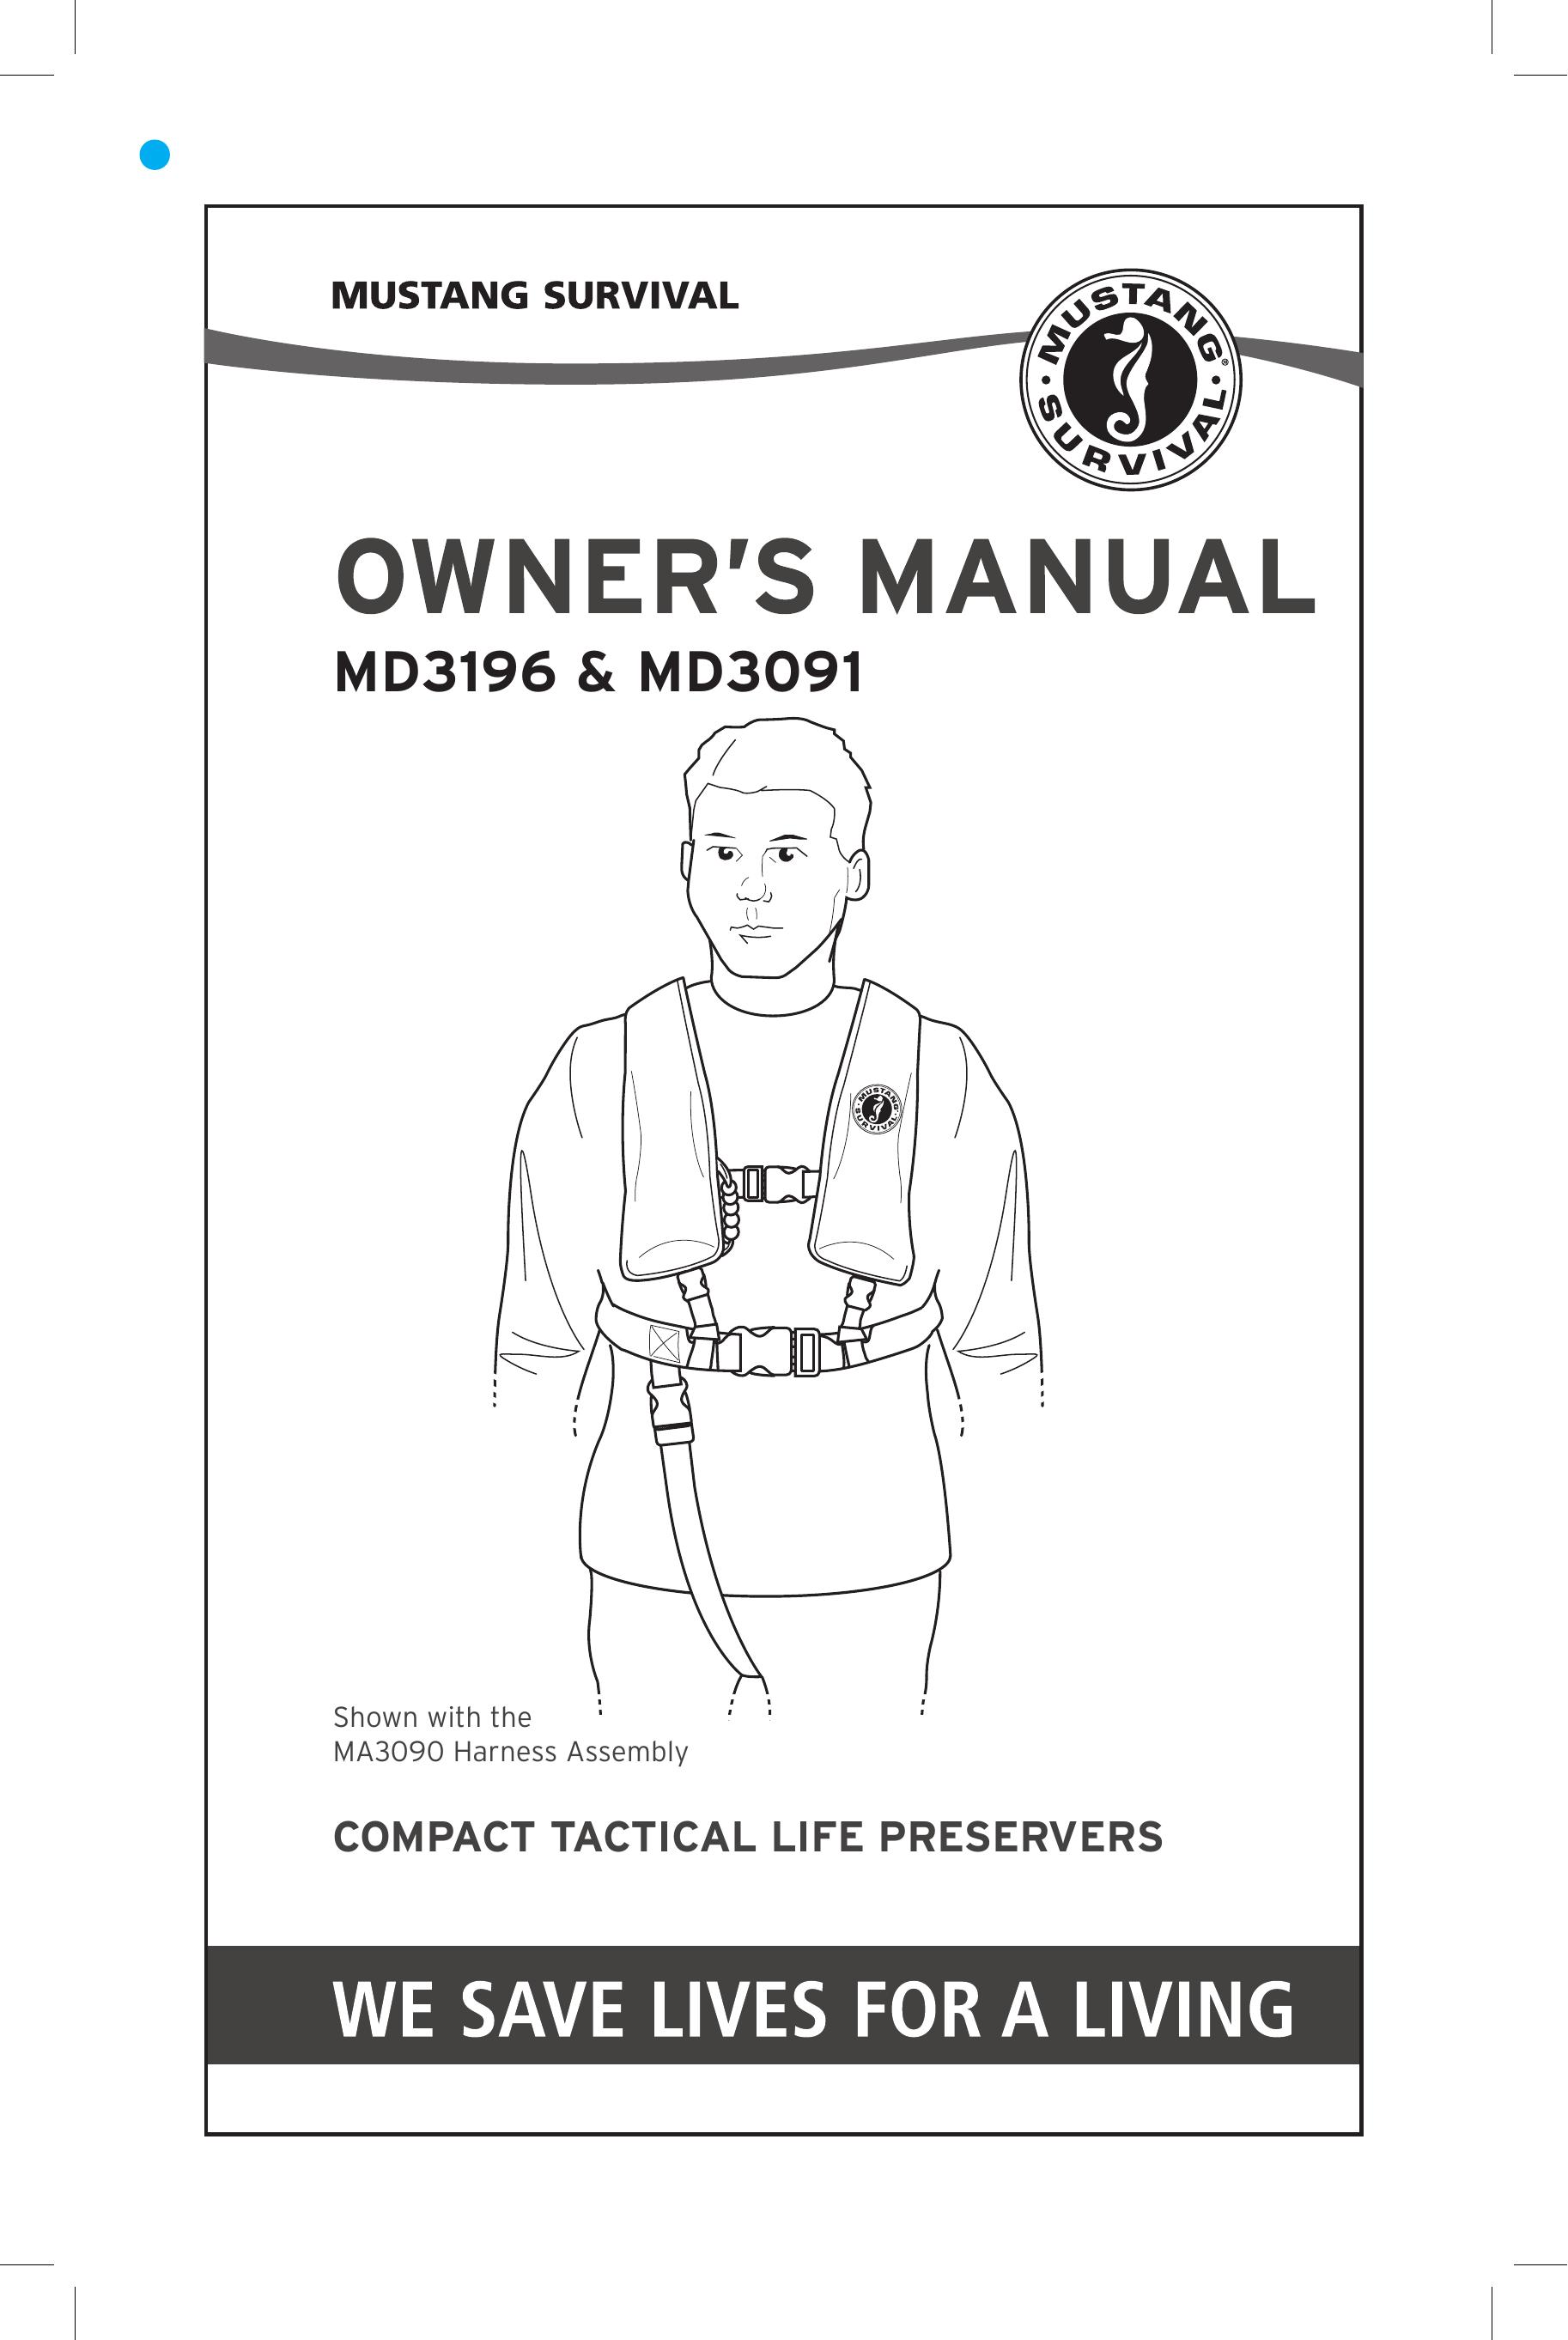 Mustang Survival MD3196 Life Jacket User Manual